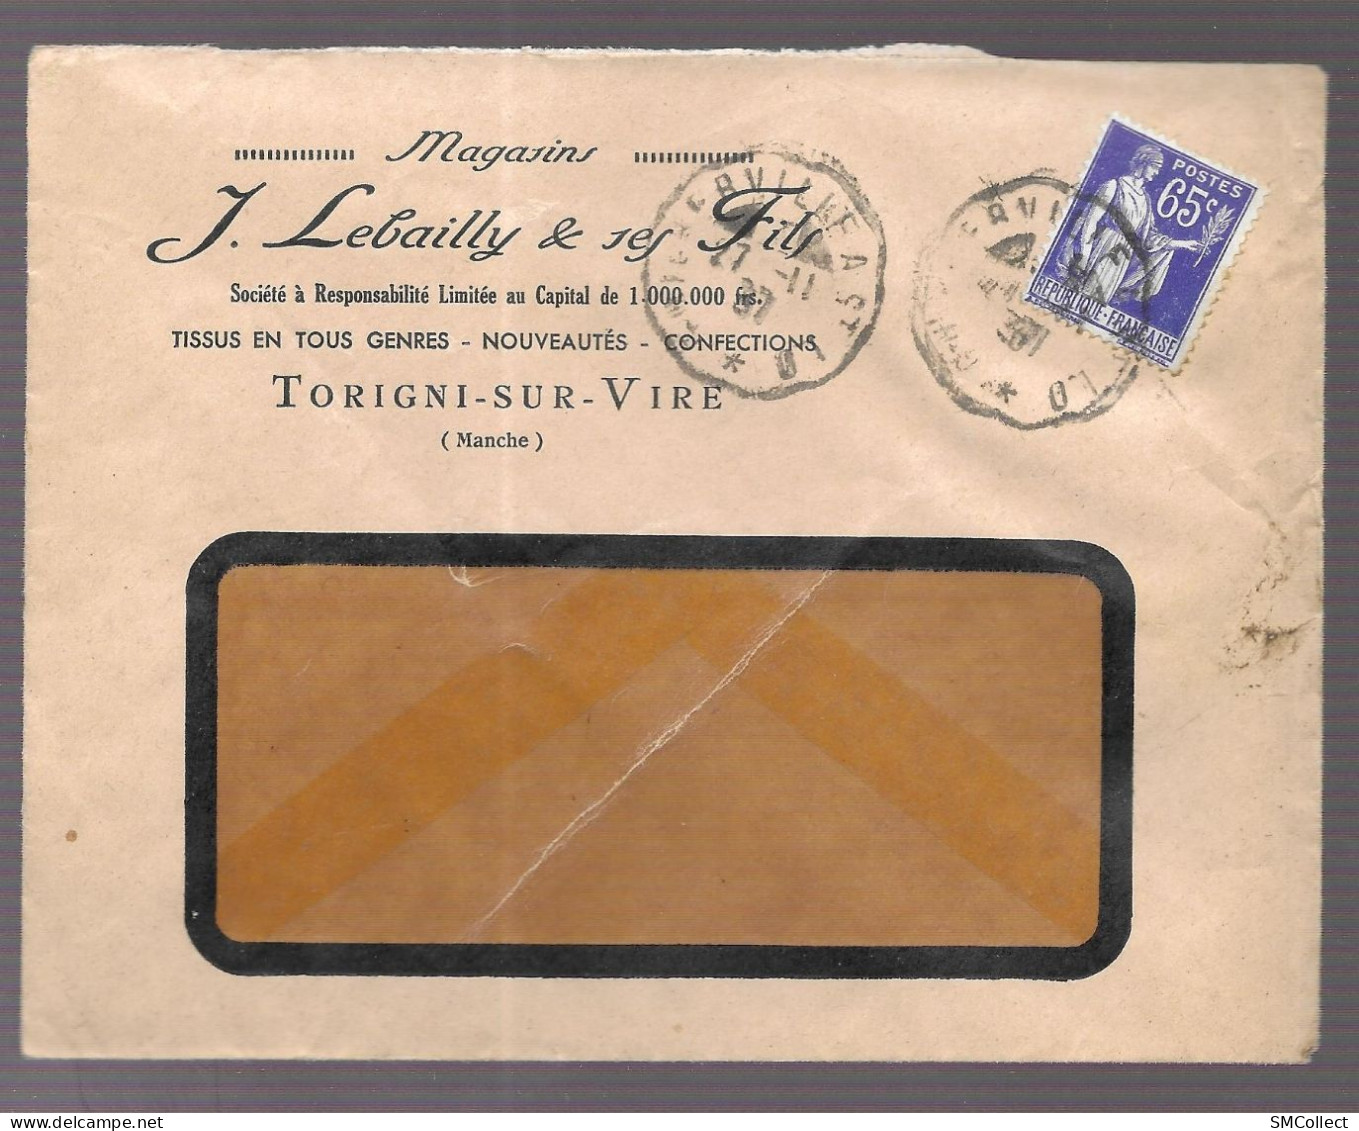 Torigni Sur Vire 1937. Enveloppe à En-tête J. Lebailly & Ses Fils - 1921-1960: Période Moderne